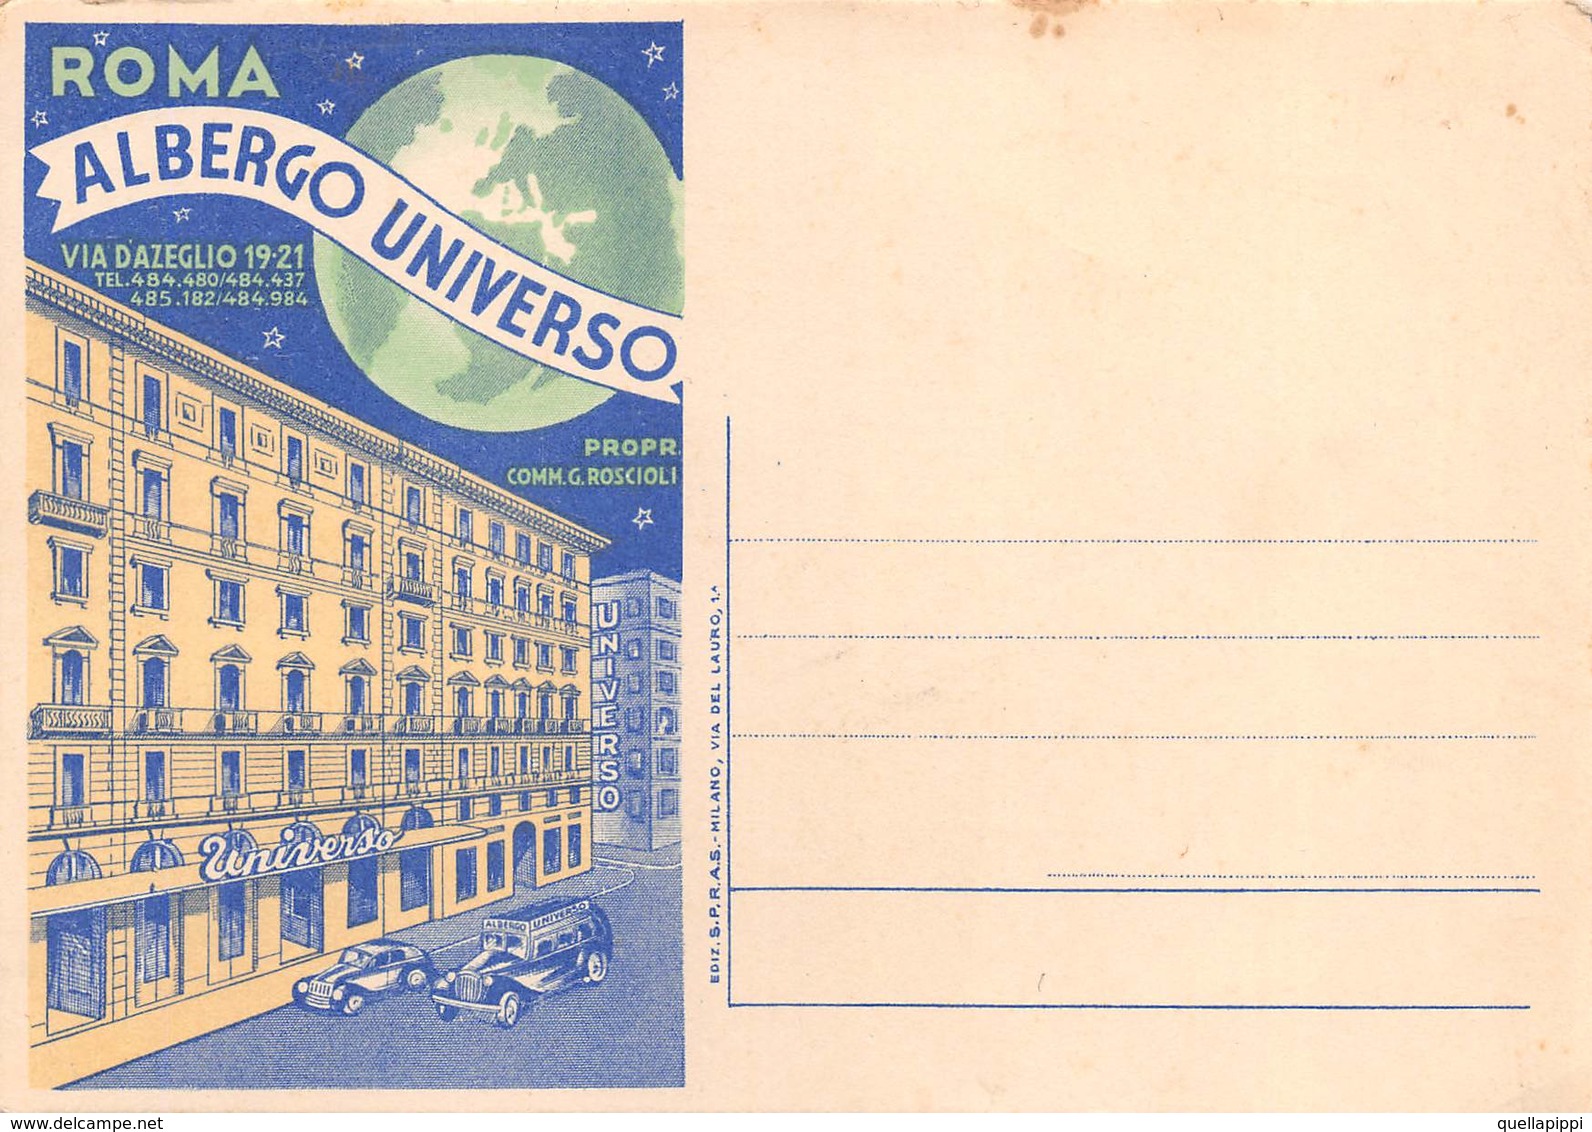 09987 "ROMA - ALBERGO UNIVERSO - PROPR. COMM. G. ROSCIOLI" CART. NON SPED - Cafes, Hotels & Restaurants